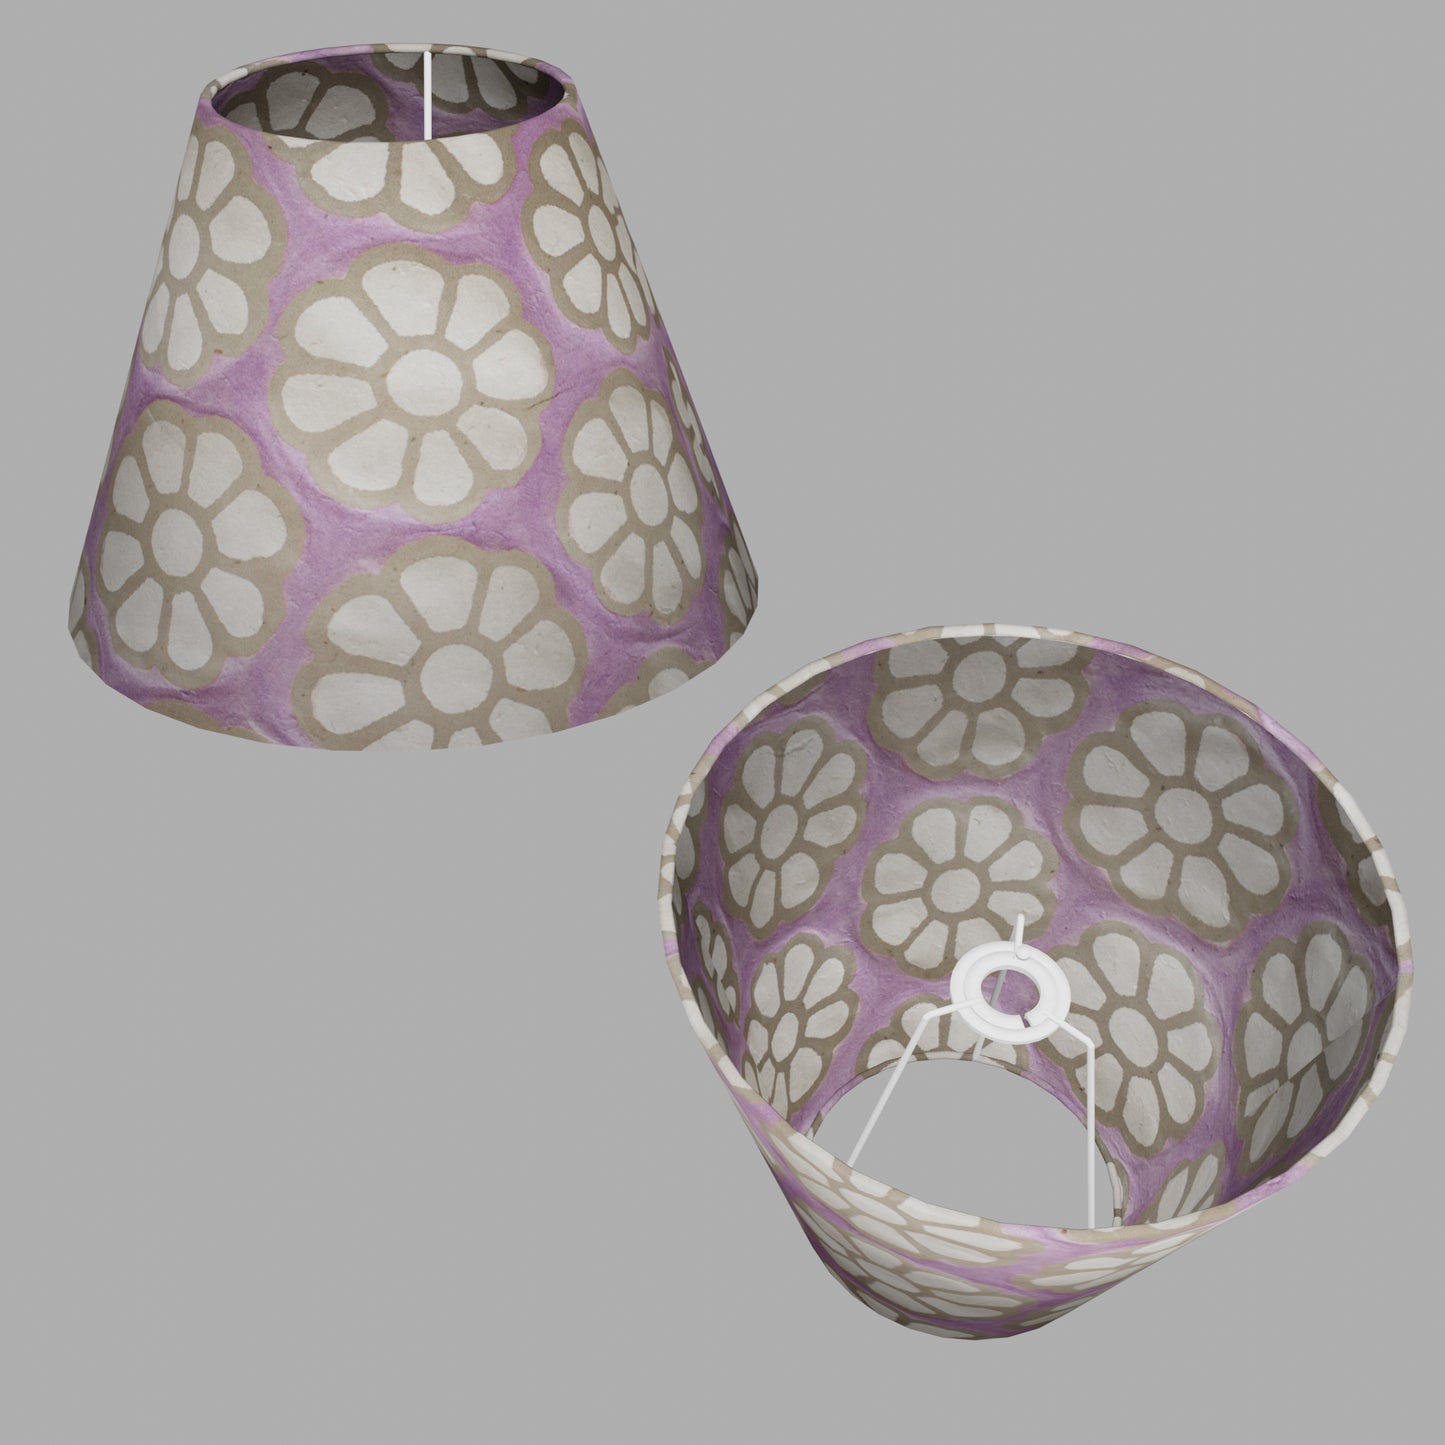 Conical Lamp Shade P21 - Batik Big Flower on Lilac, 15cm(top) x 30cm(bottom) x 22cm(height)